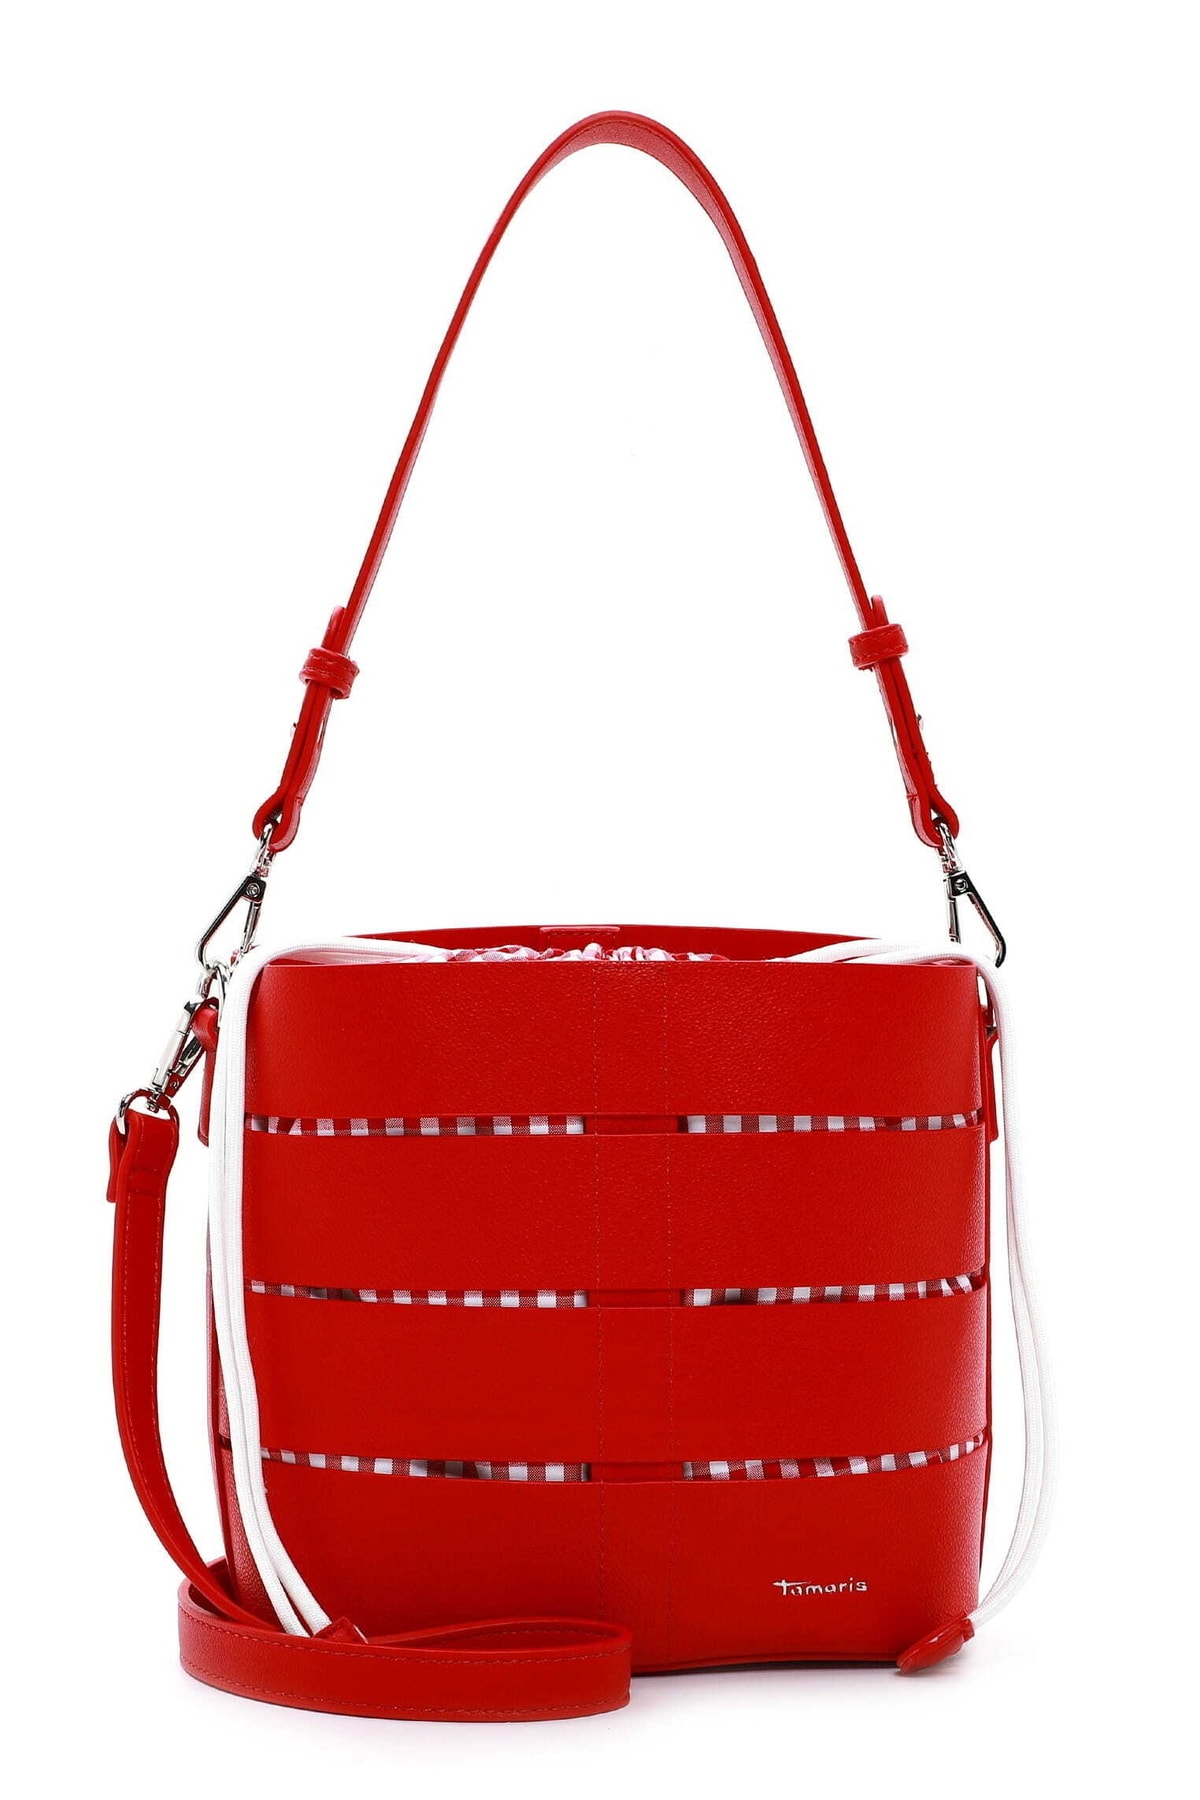 Tamaris Handtasche Rot Strukturiert Fast ausverkauft